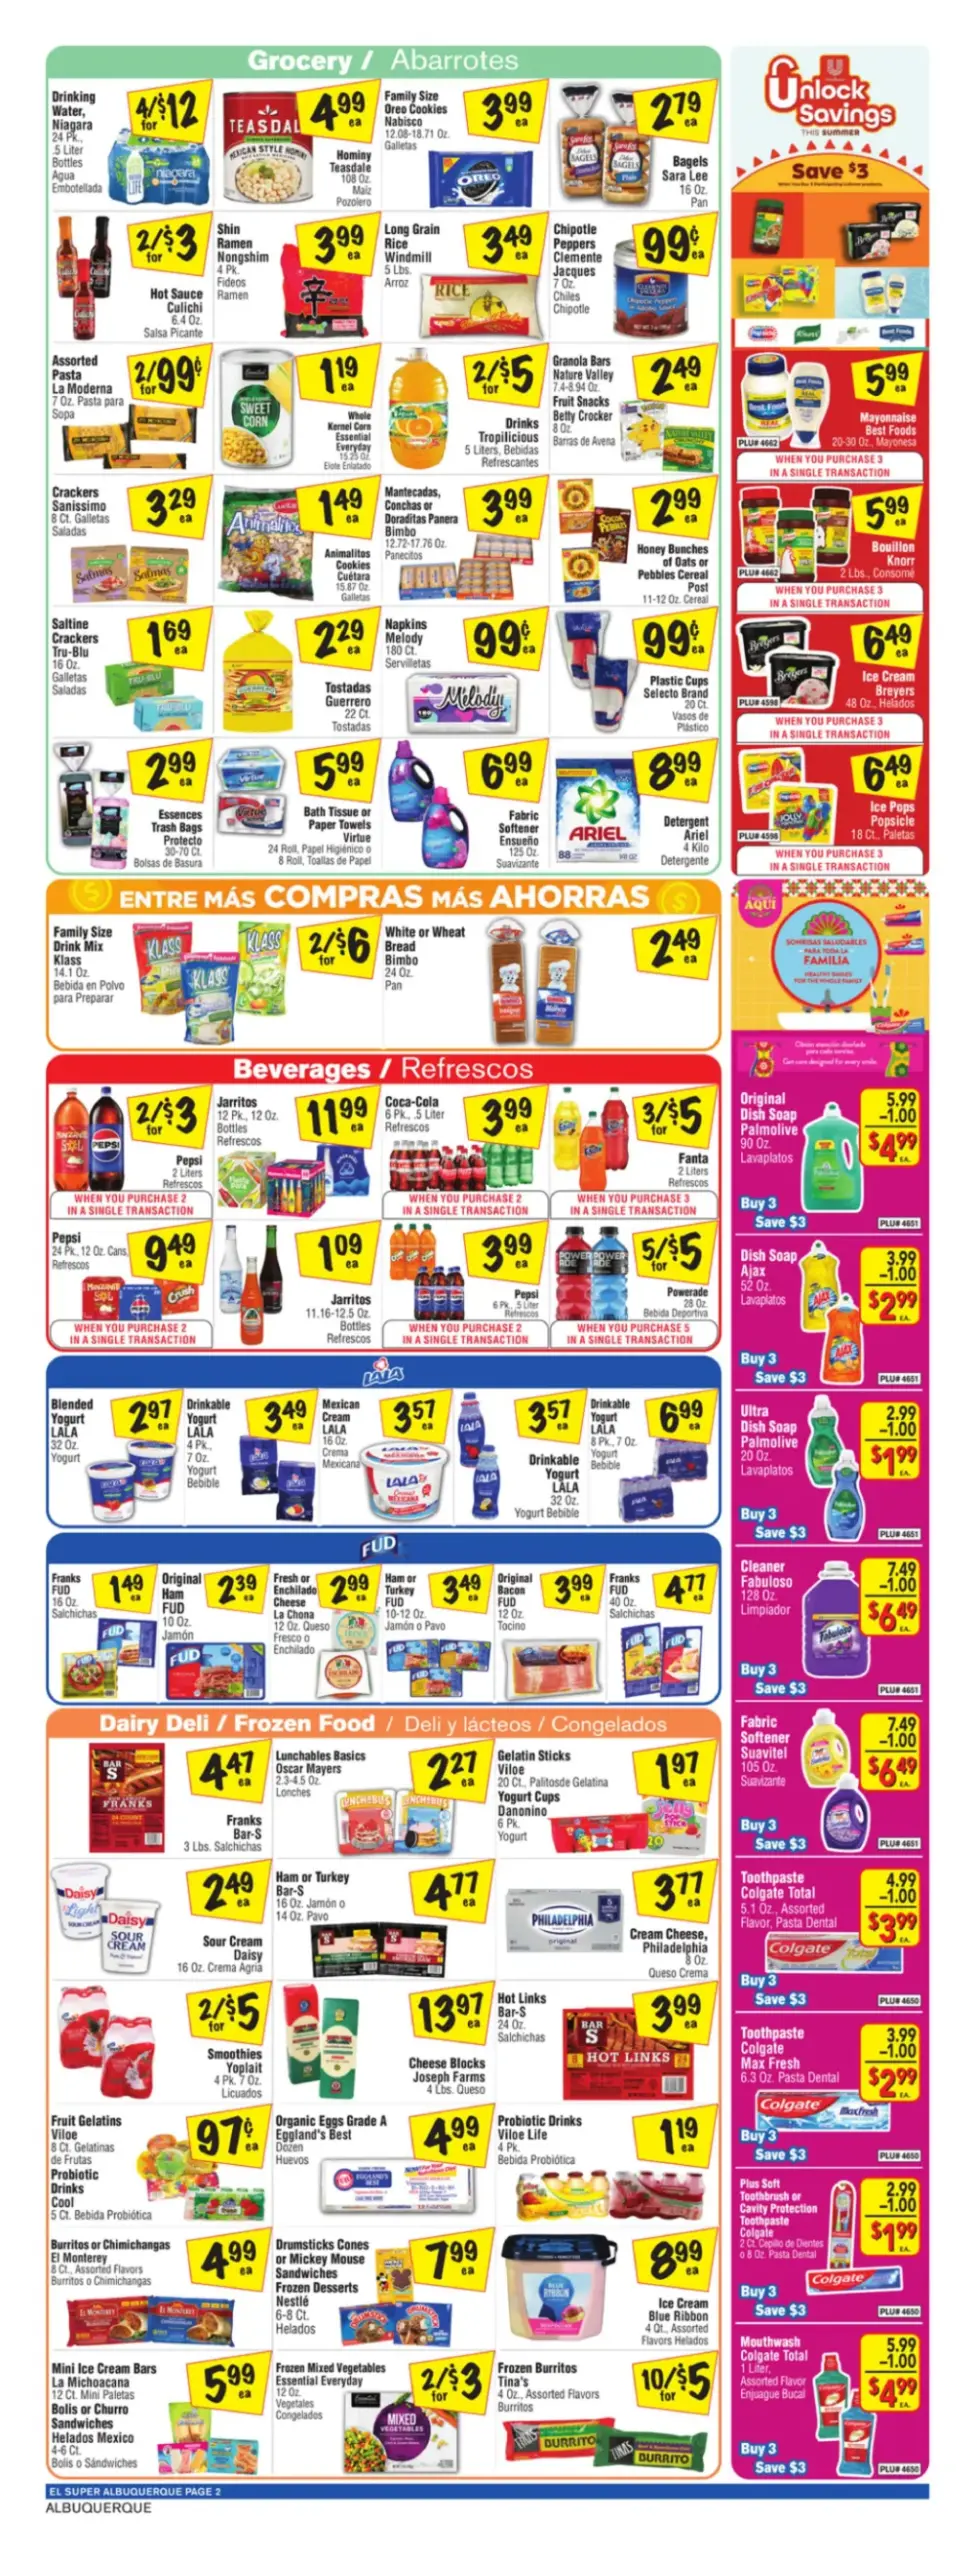 El Super Weekly Ad July 2024 Weekly Sales, Deals, Discounts and Digital Coupons.